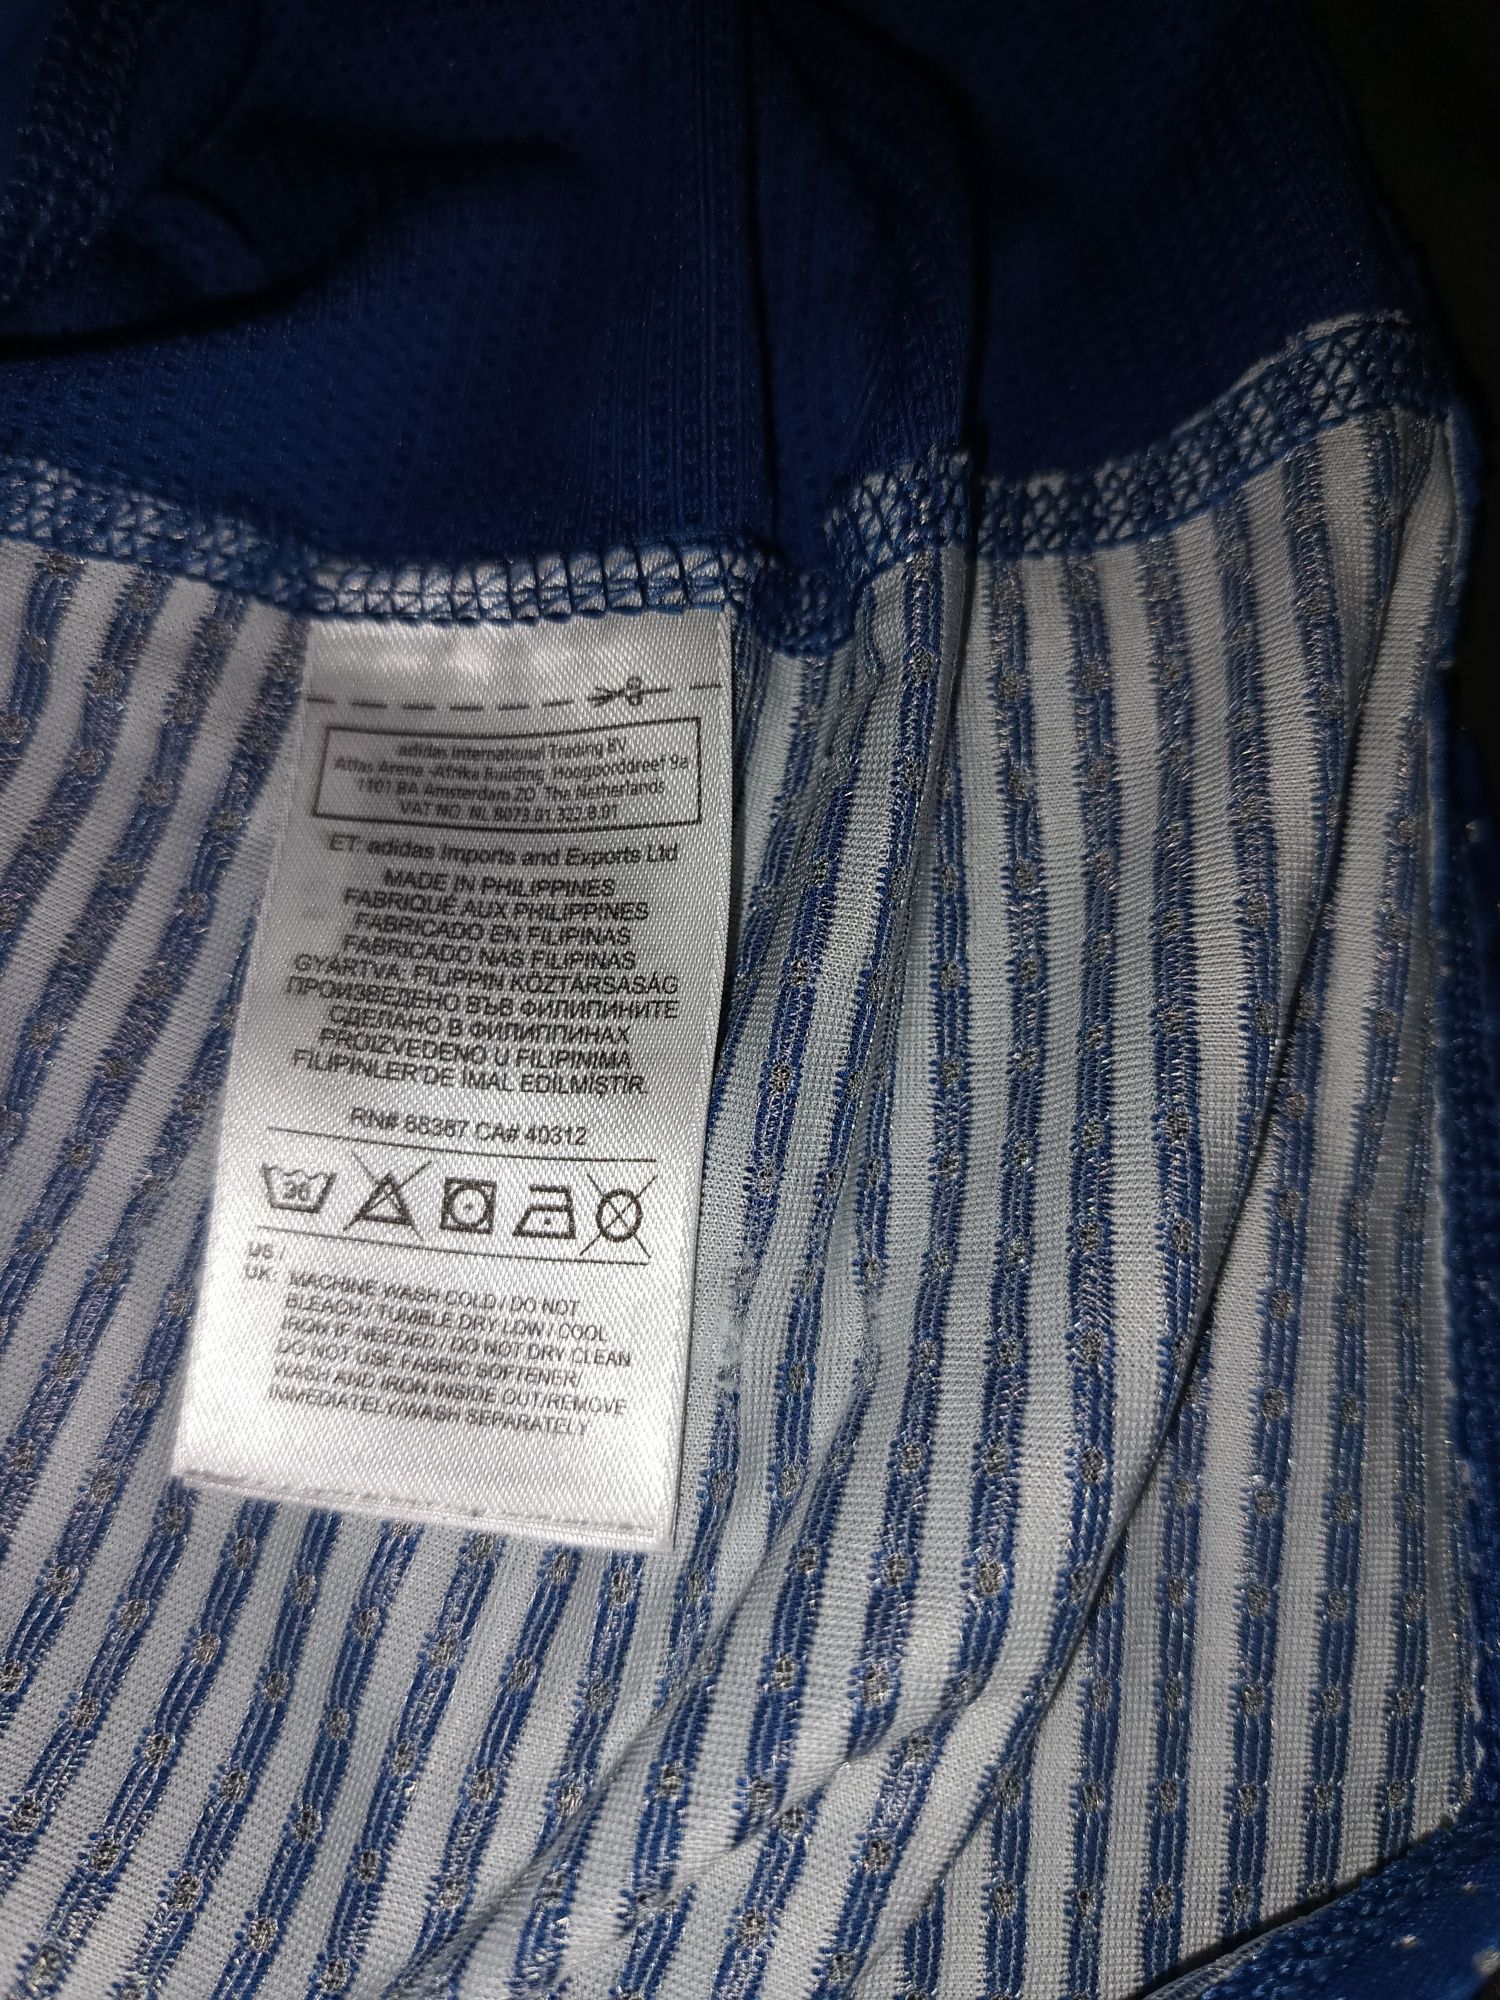 Bluză dama, Adidas, TechFit